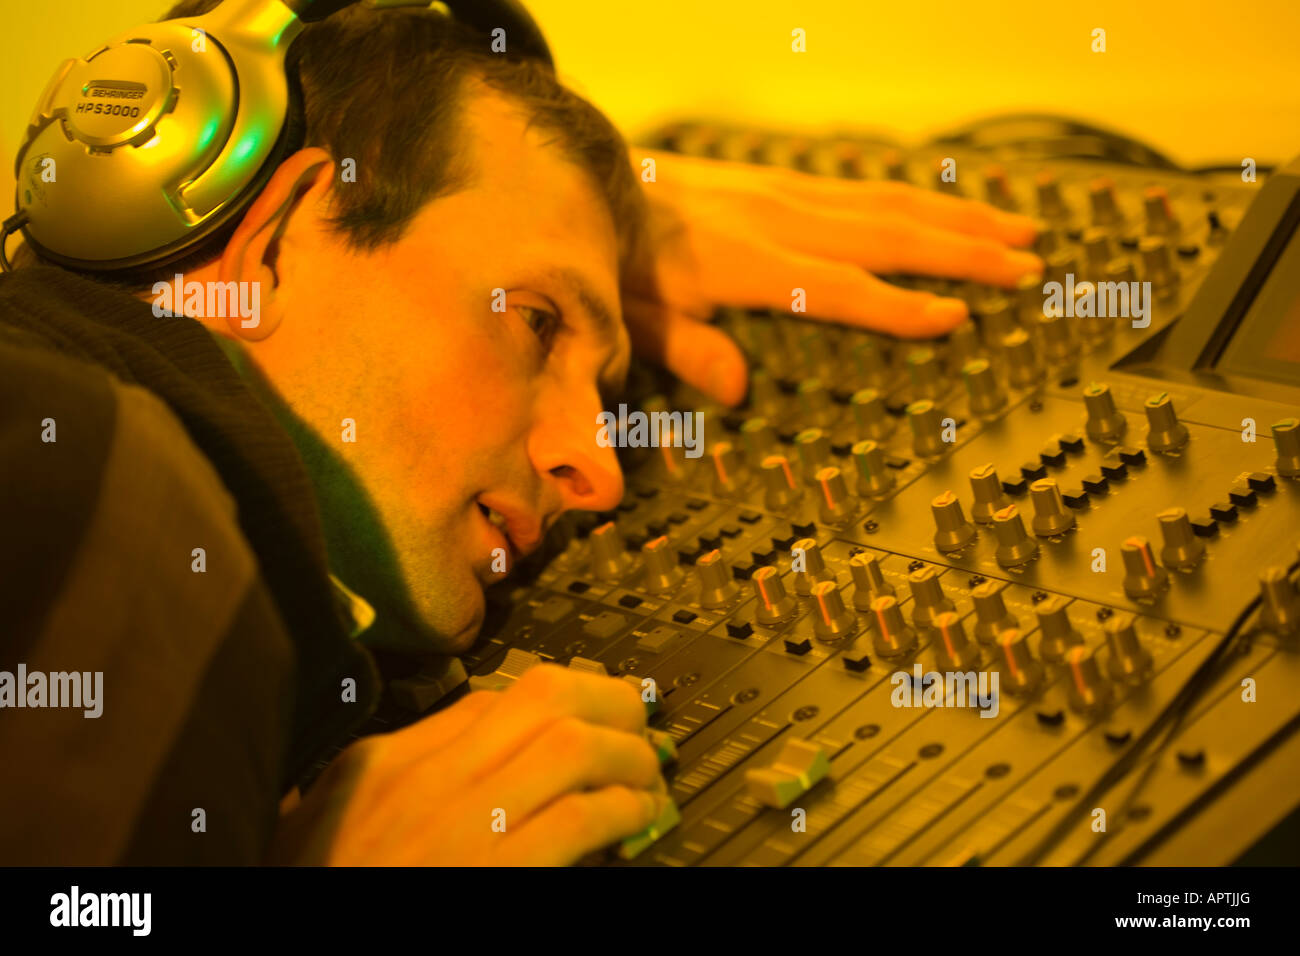 Man wearing headphones sprawling across mixing desk Stock Photo